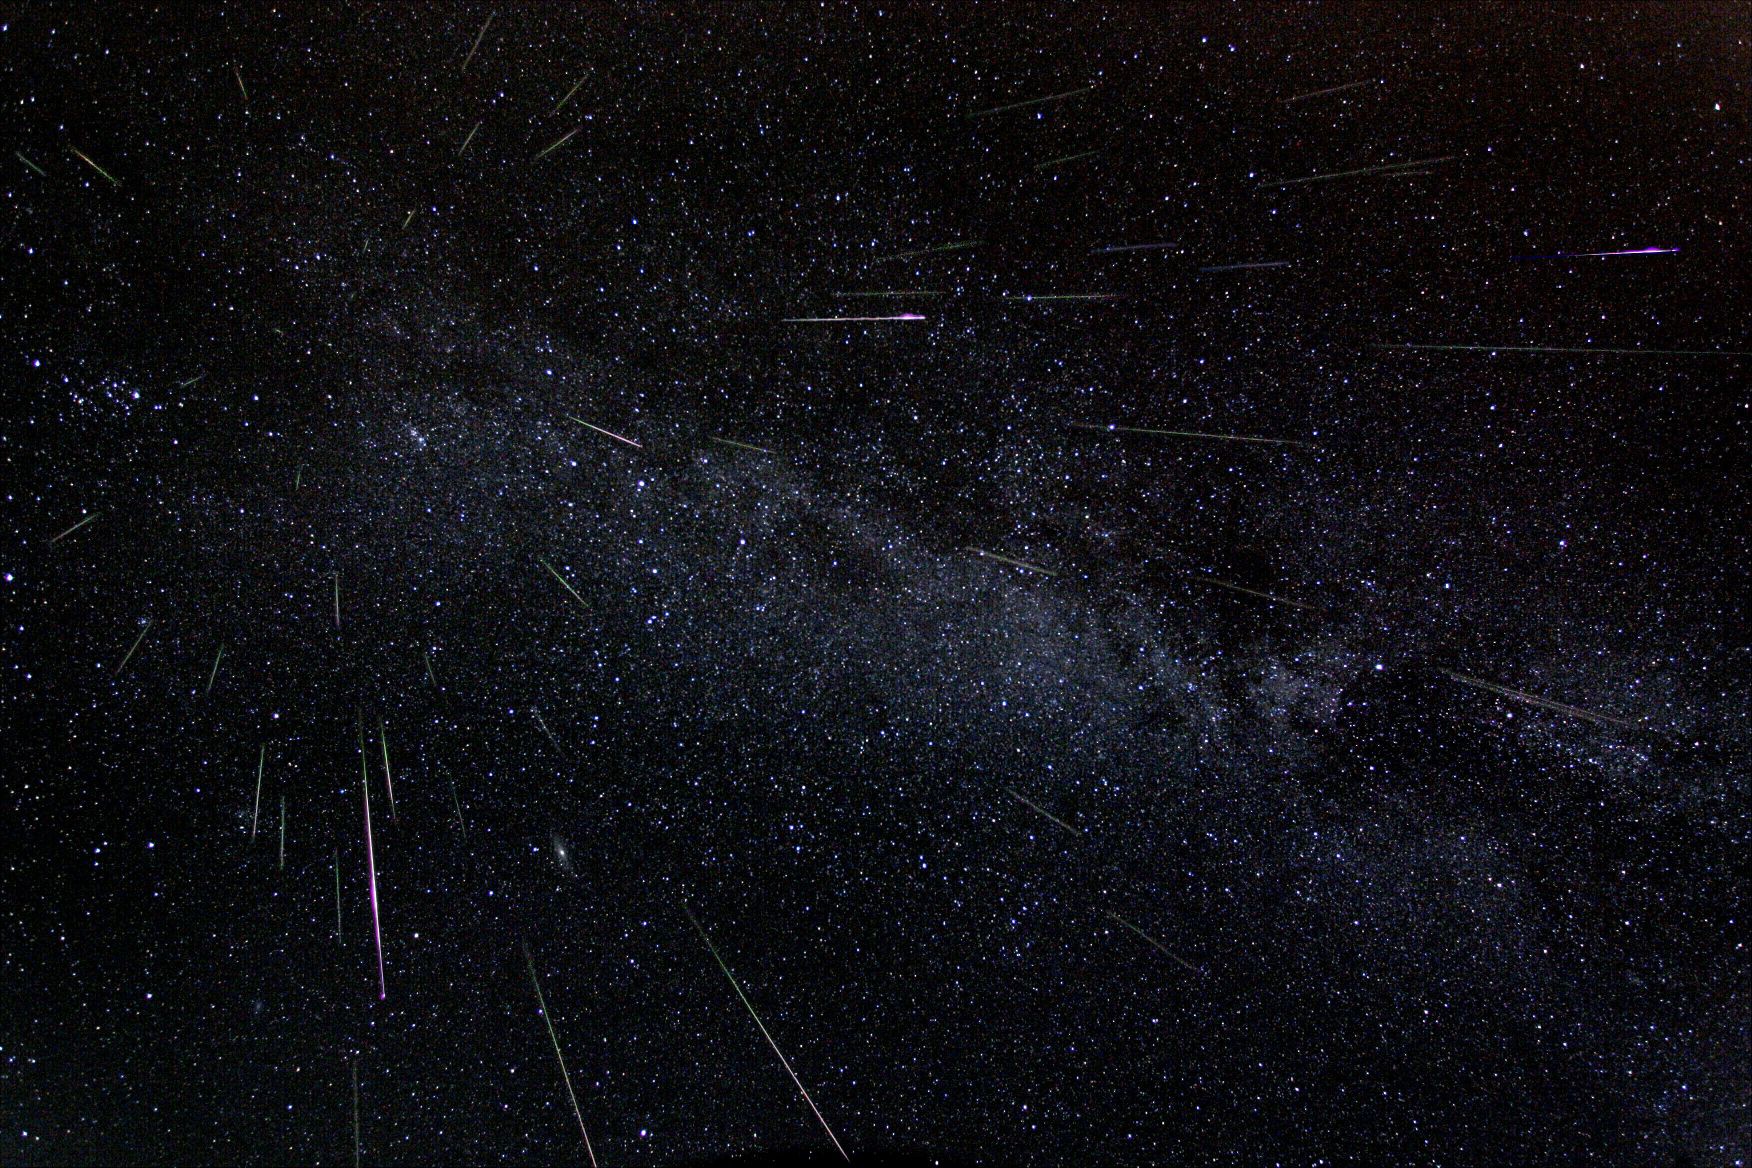 Chuva de meteoros Perseidas de agosto deste ano (Foto: nasamarshall | flickr | creative commons)